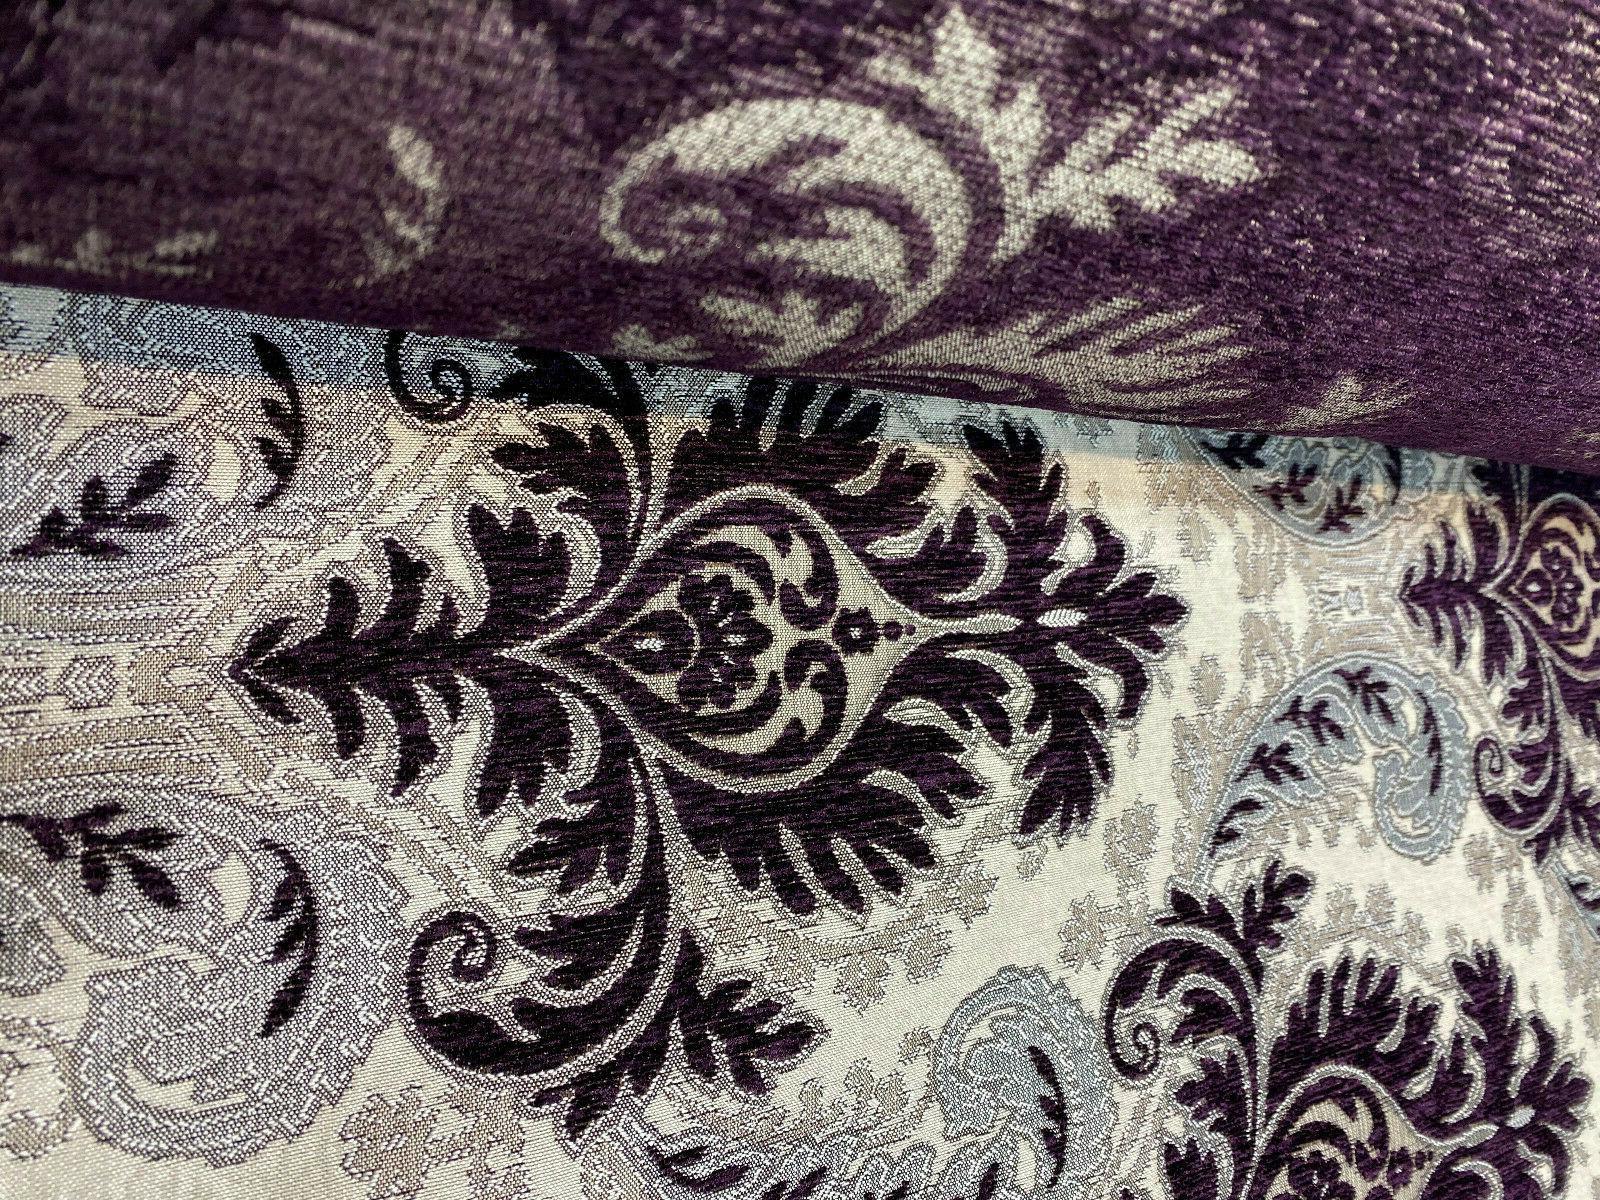 Matrix Fire retardant Upholstery Fabric in Purple